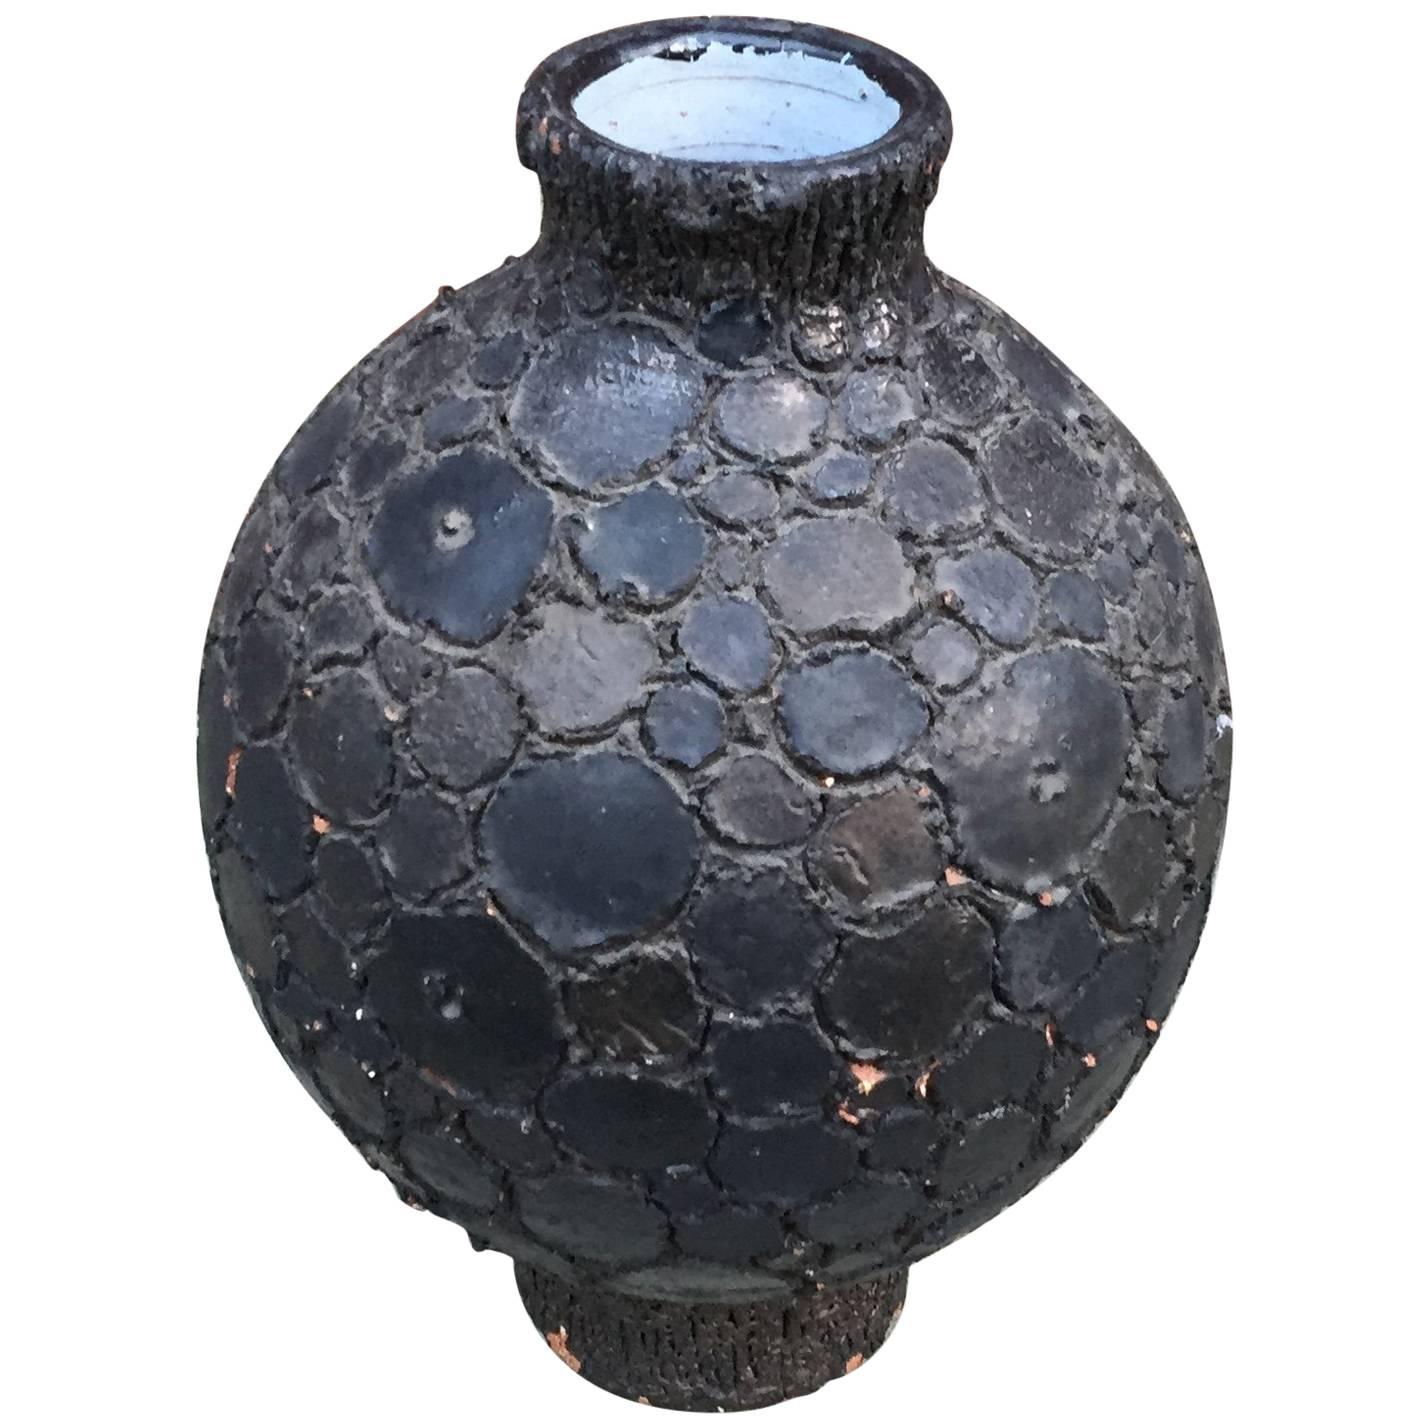 Perignem , Japanese-inspired ceramic vase, not signed, circa 1950